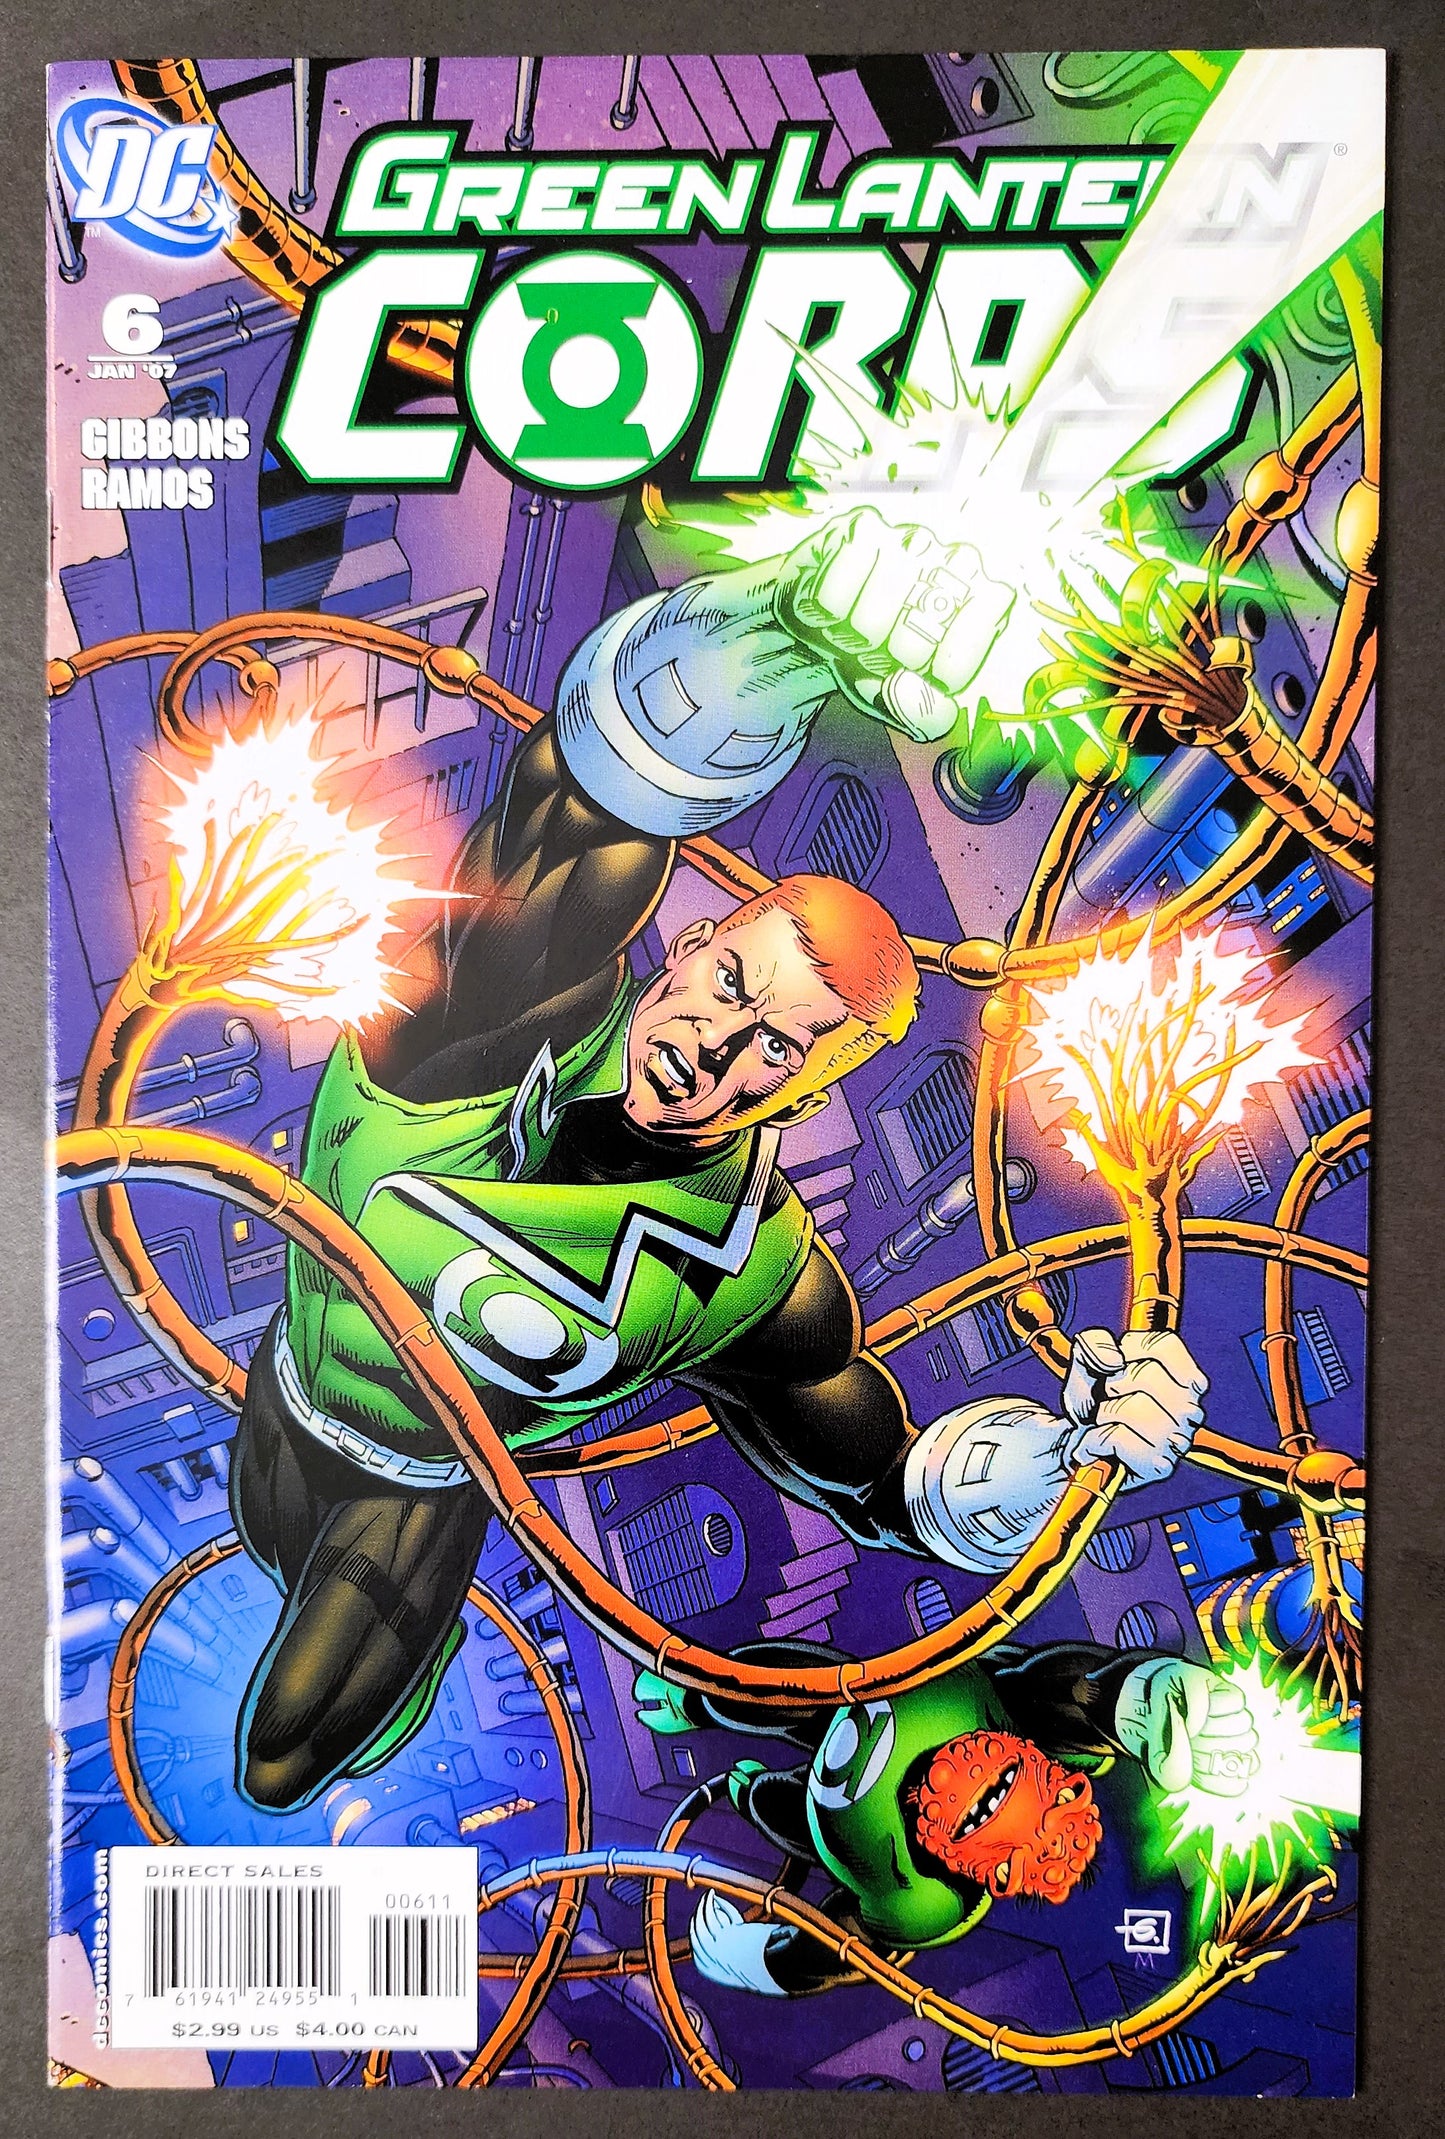 Green Lantern Corps #6 (VF-)